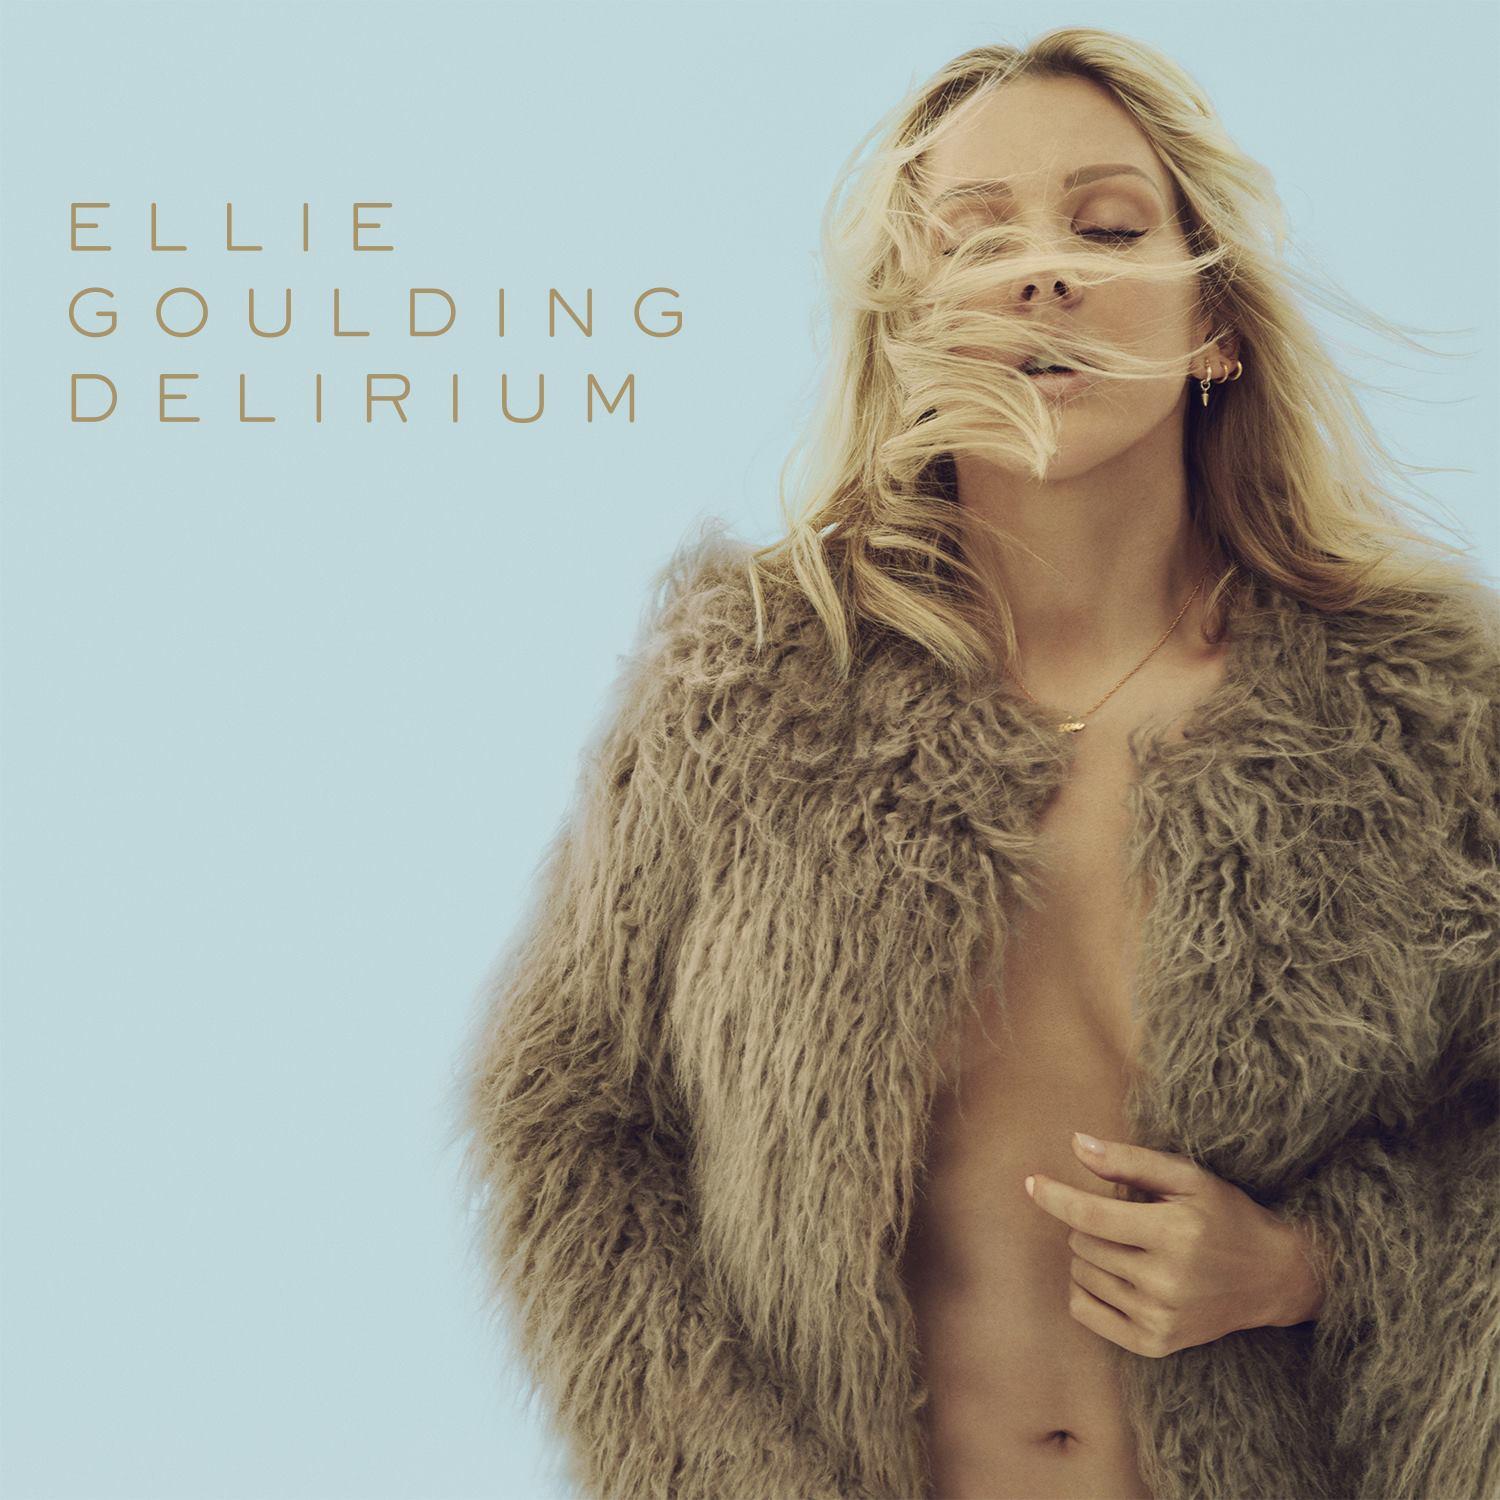 facebook.comPop artist Ellie Goulding released her new album “Delirium” Nov. 6.